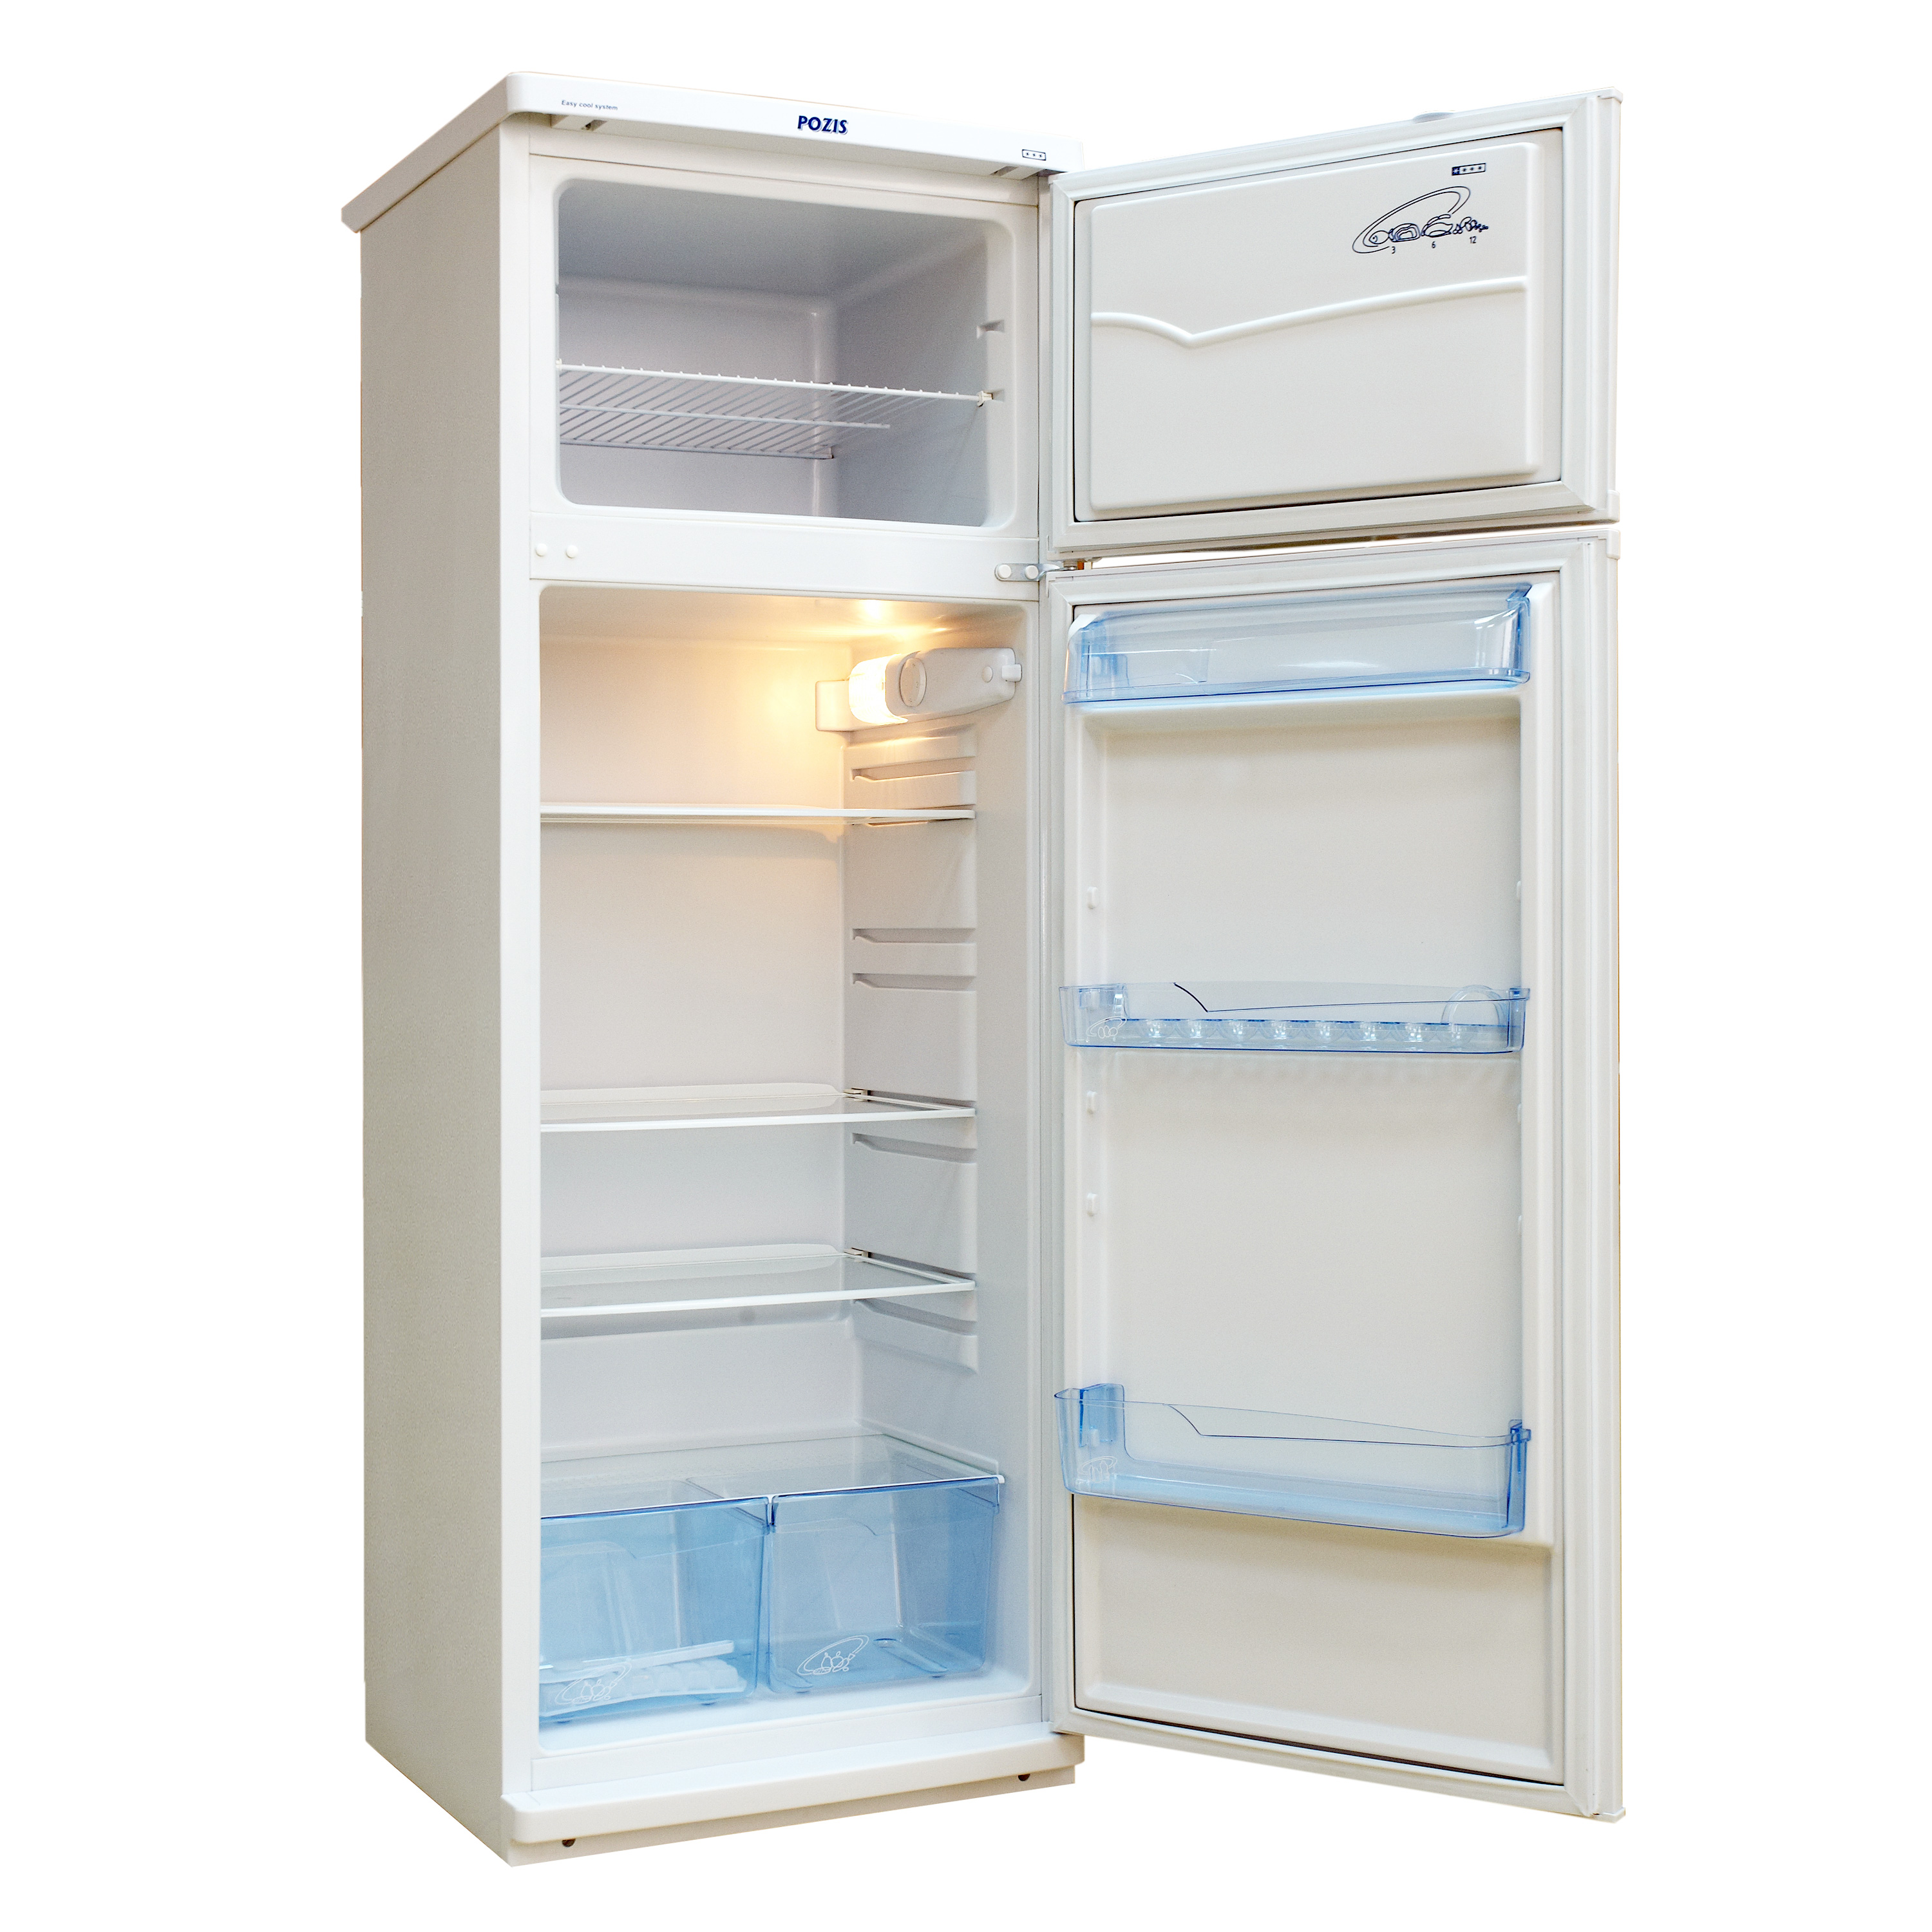 Pozis сайт. Холодильник Pozis мир 244-1 w. Позис 244 холодильник. Холодильник Позис мир 244-1. Холодильник Позис морозилка.